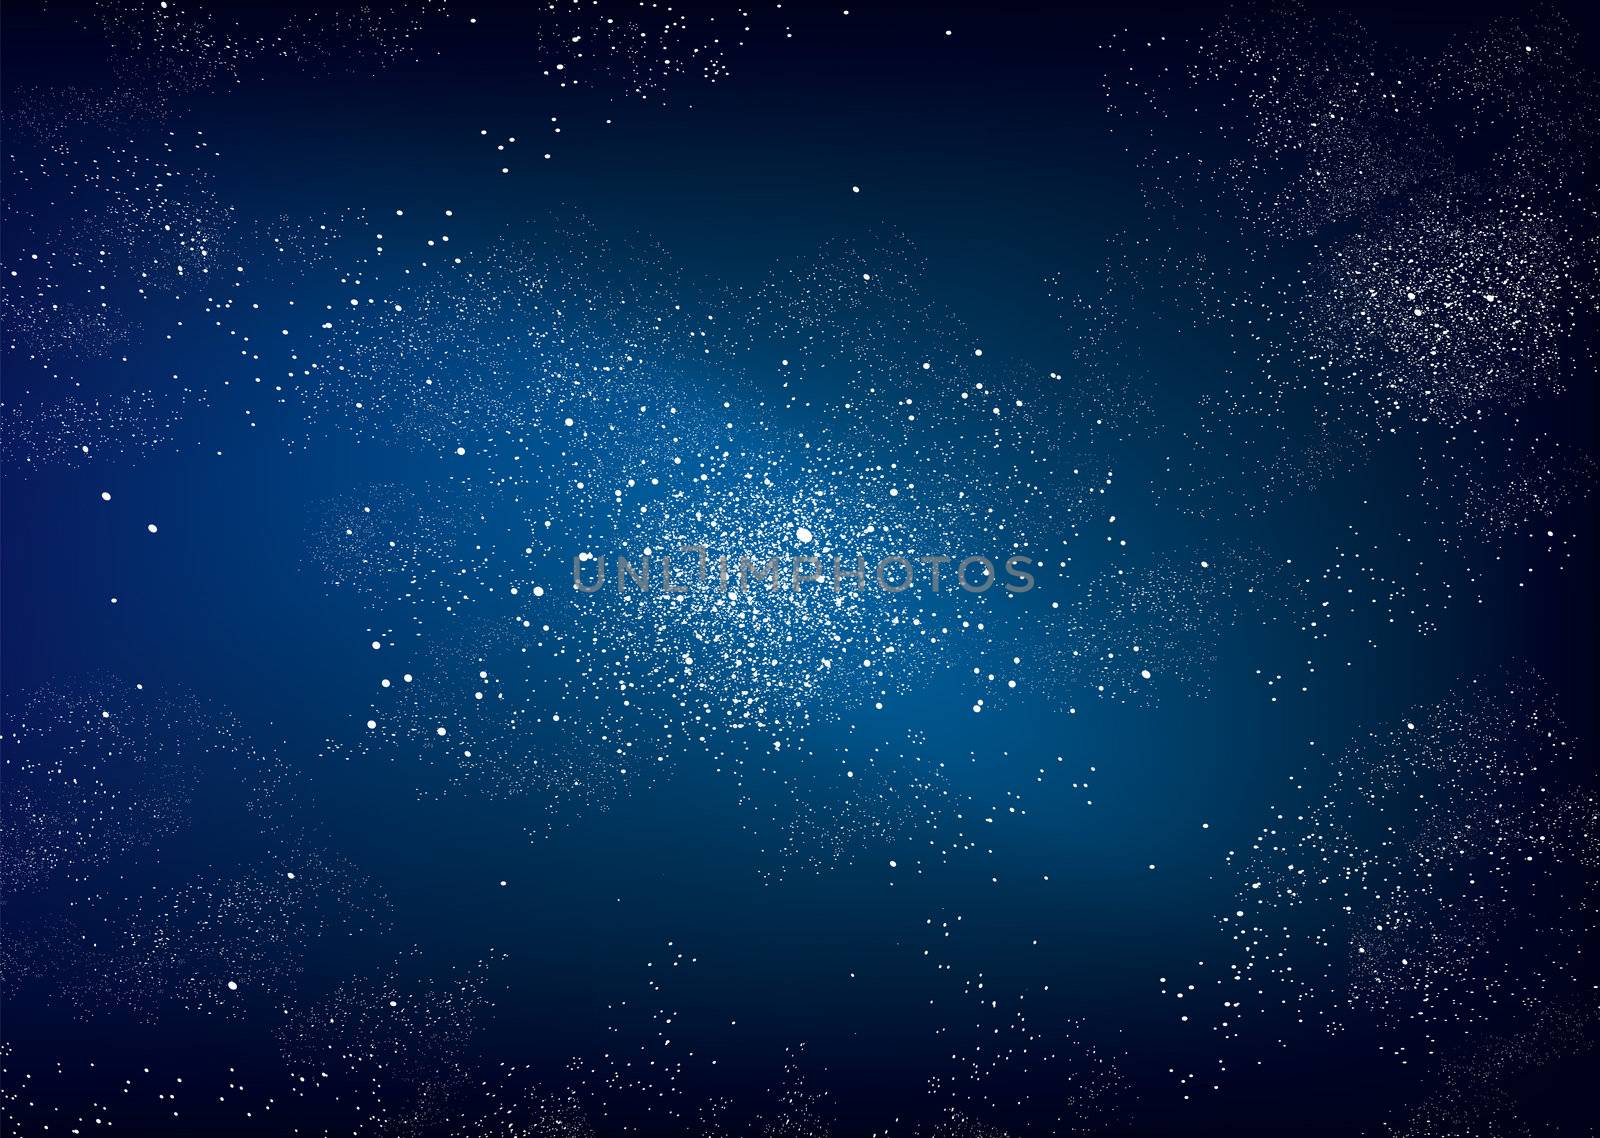 Milkyway stella background by nicemonkey